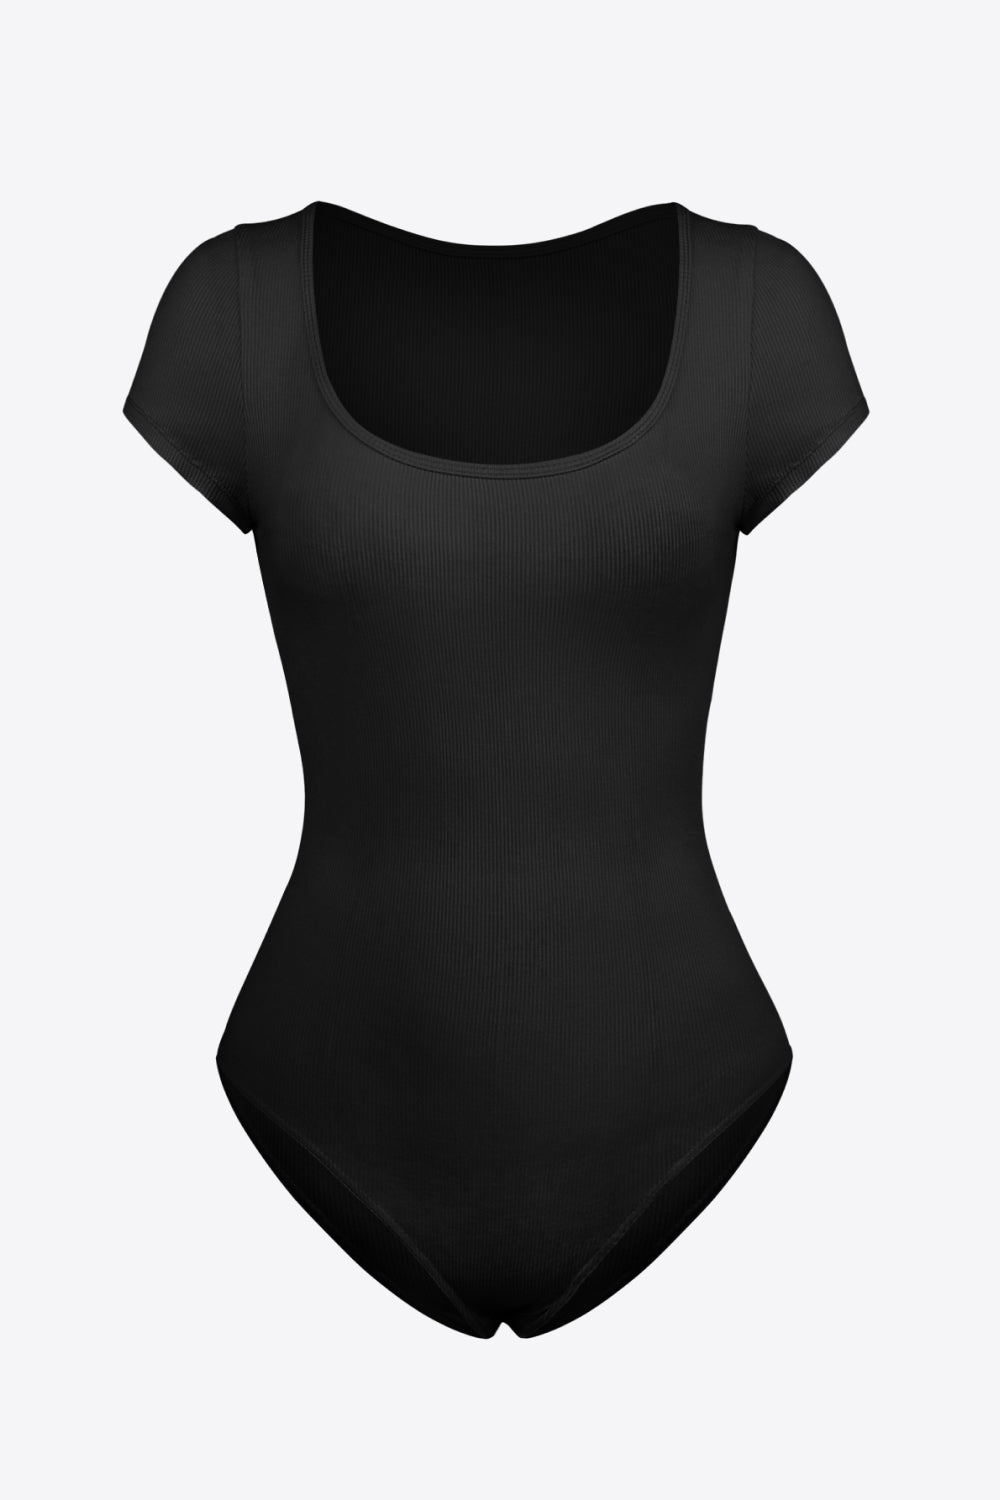 Scoop Neck Short Sleeve Bodysuit - Alonna's Legging Land